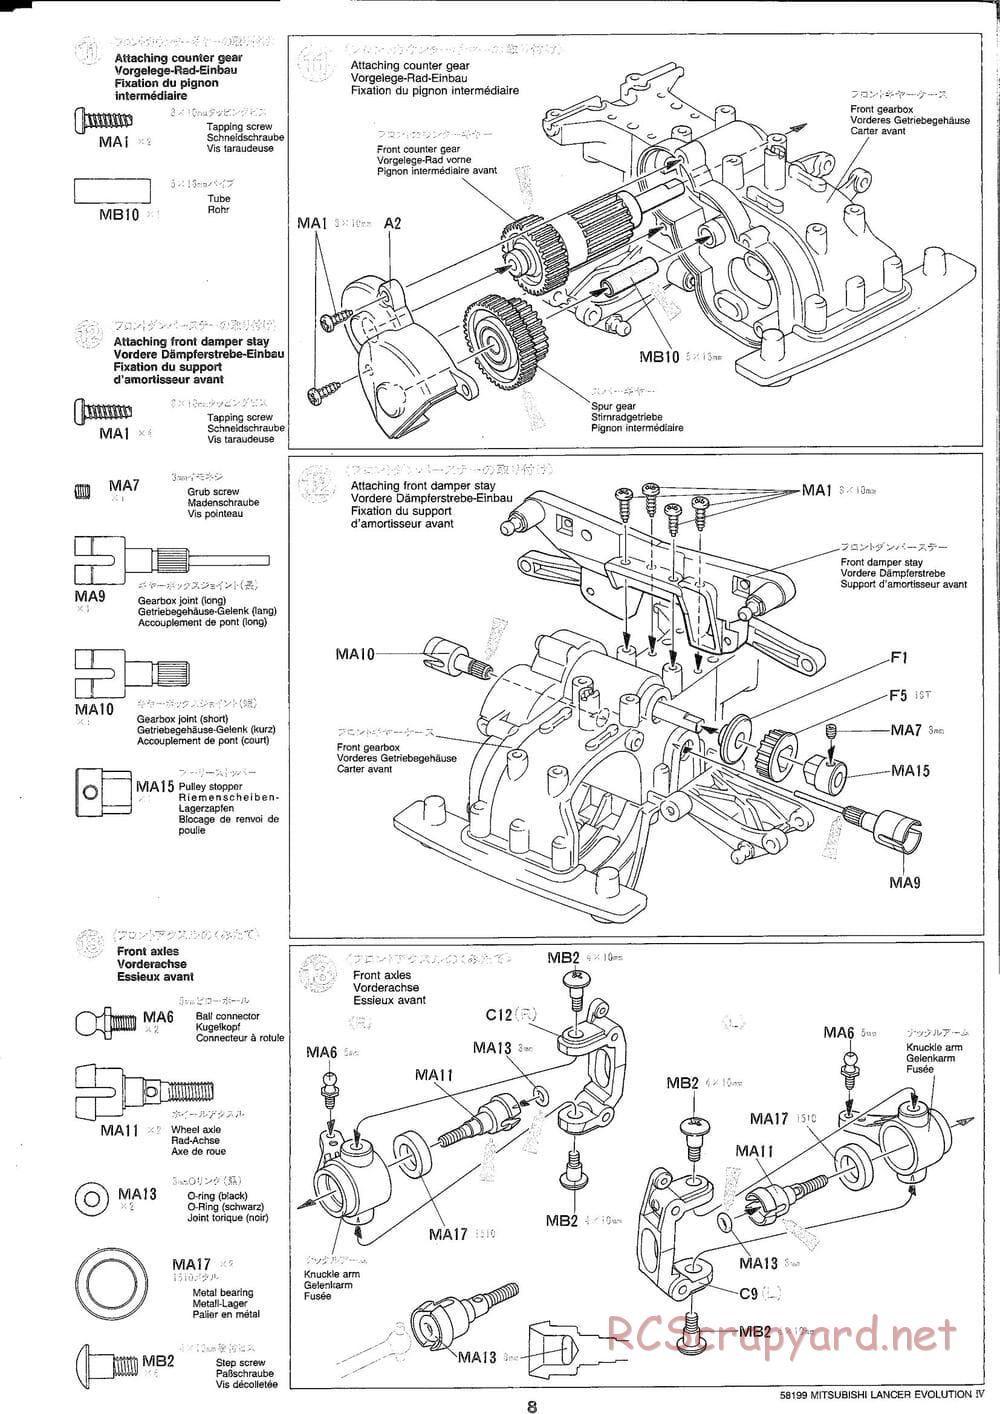 Tamiya - Mitsubishi Lancer Evolution IV - TA-03F Chassis - Manual - Page 8